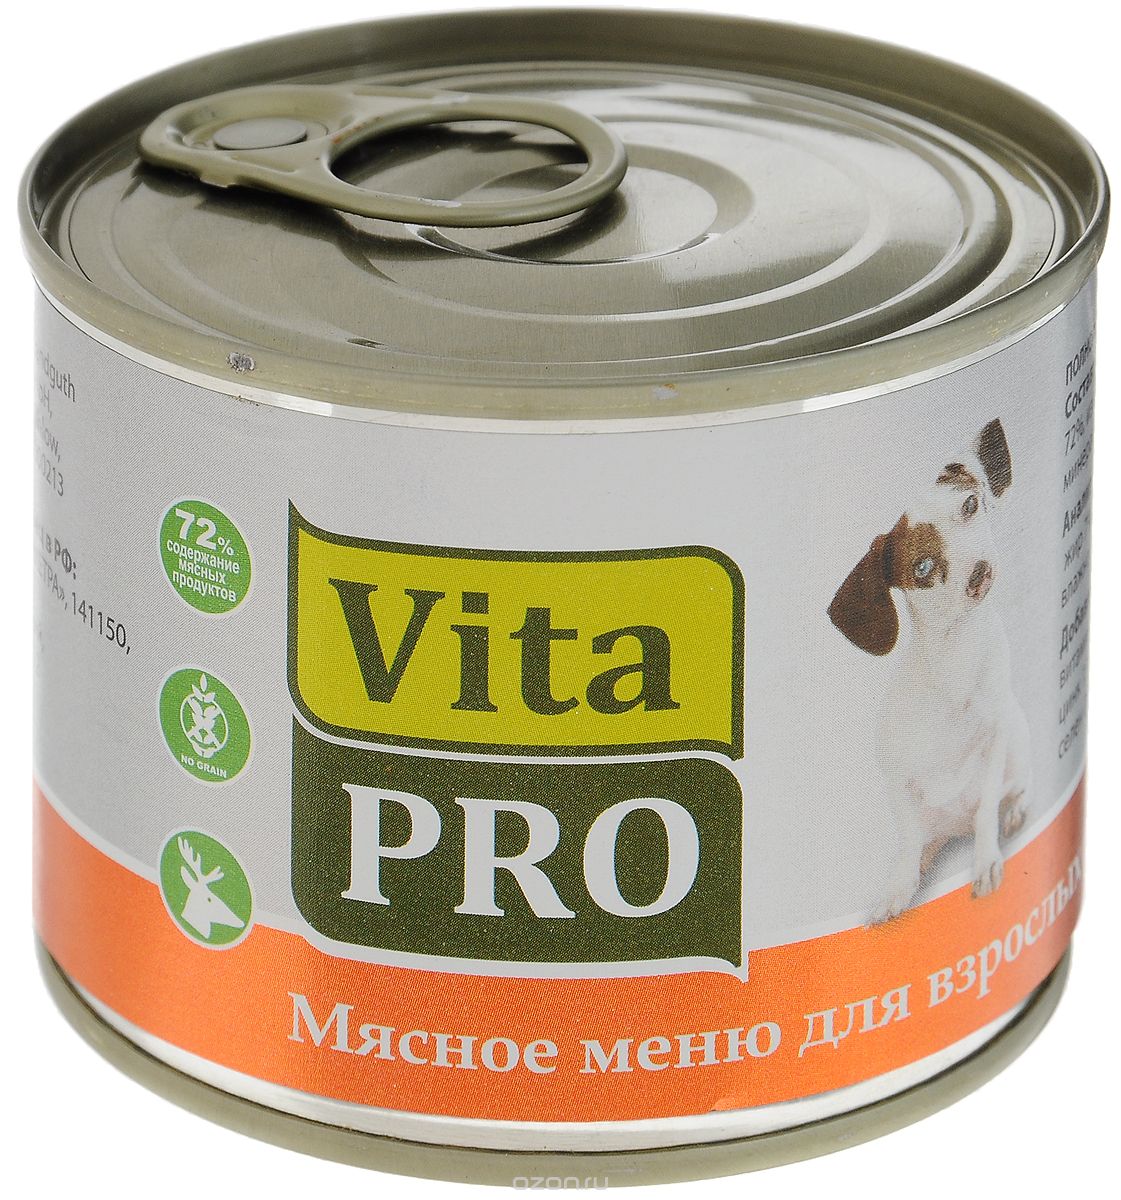  Vita Pro